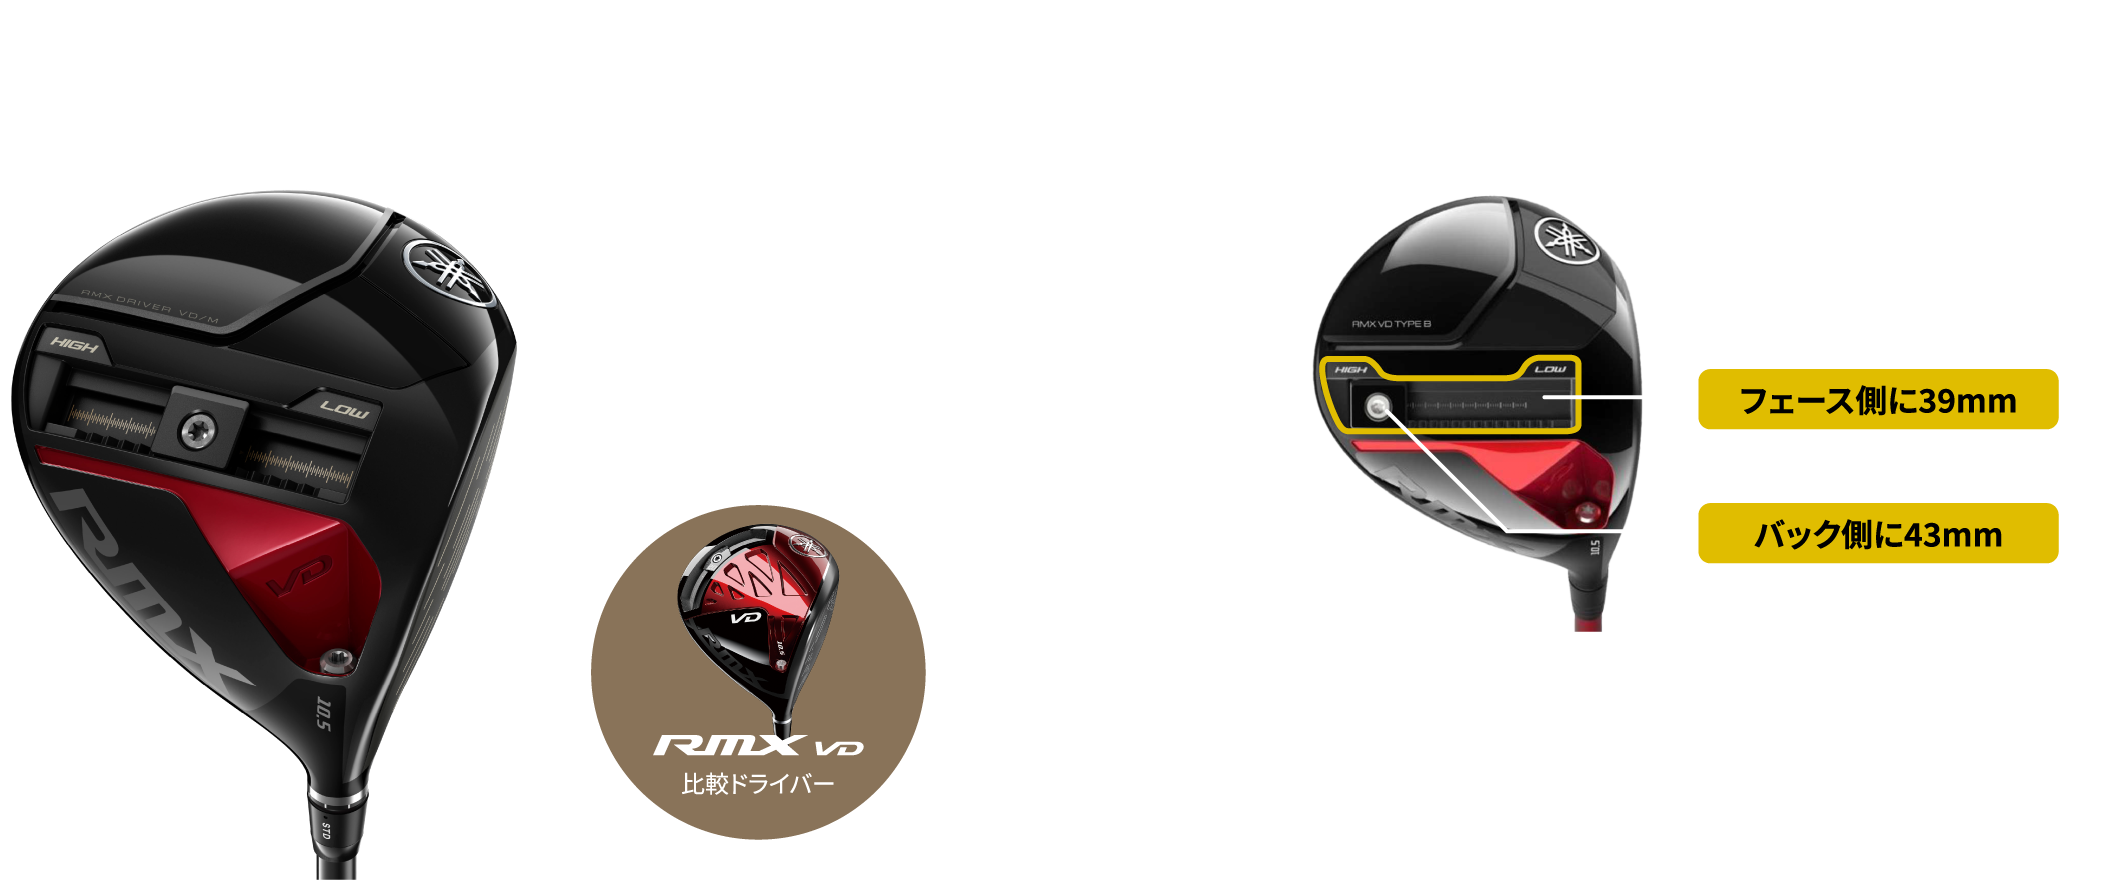 RMX VD/M